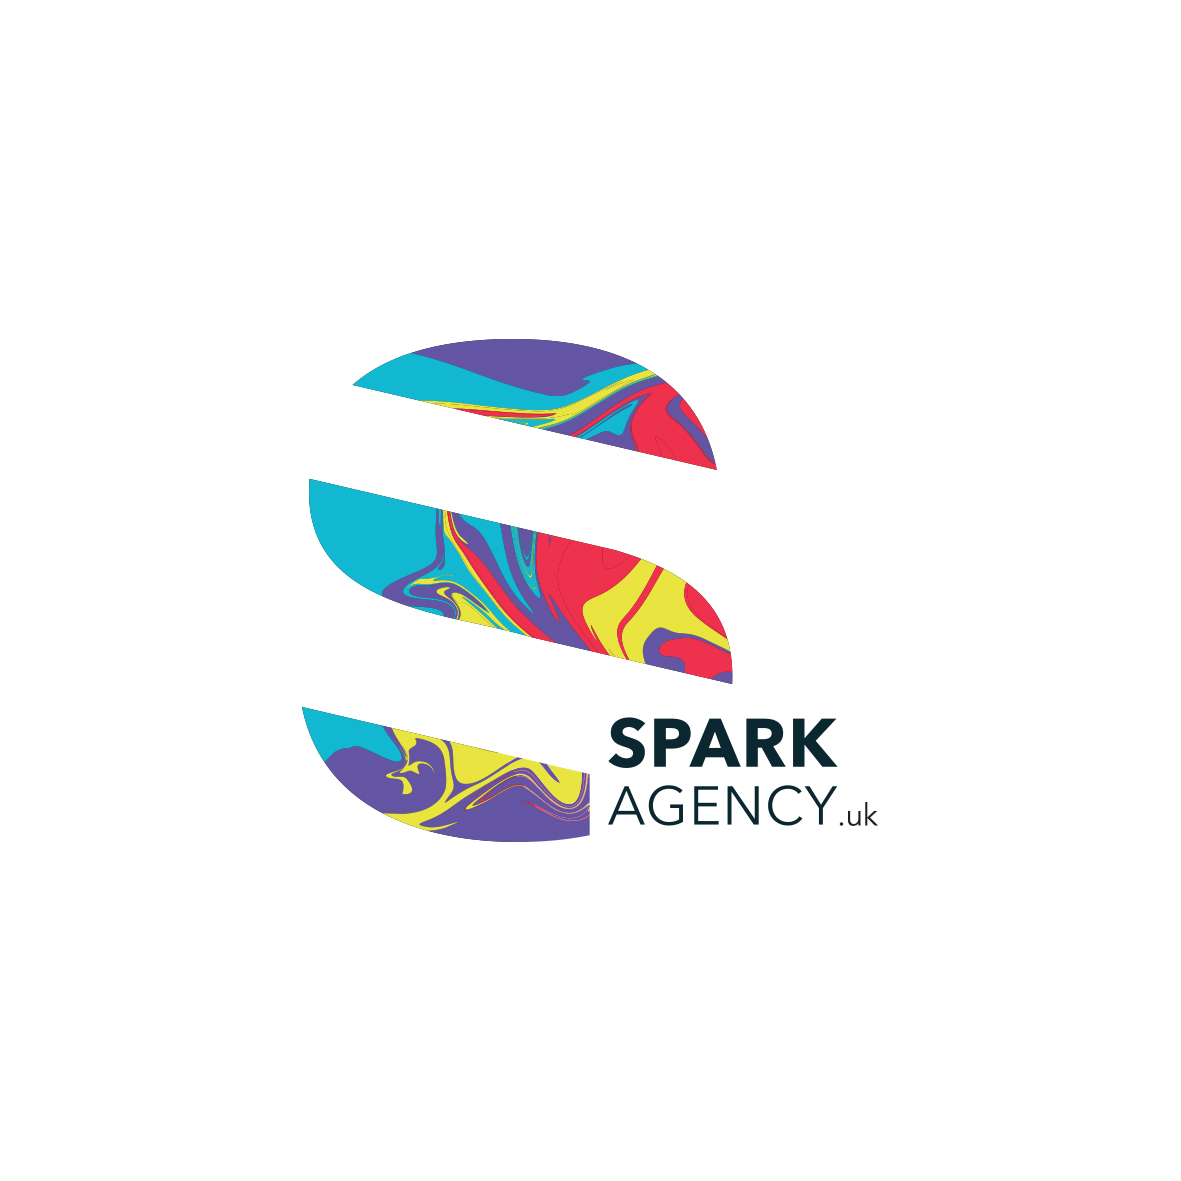 spark Logo